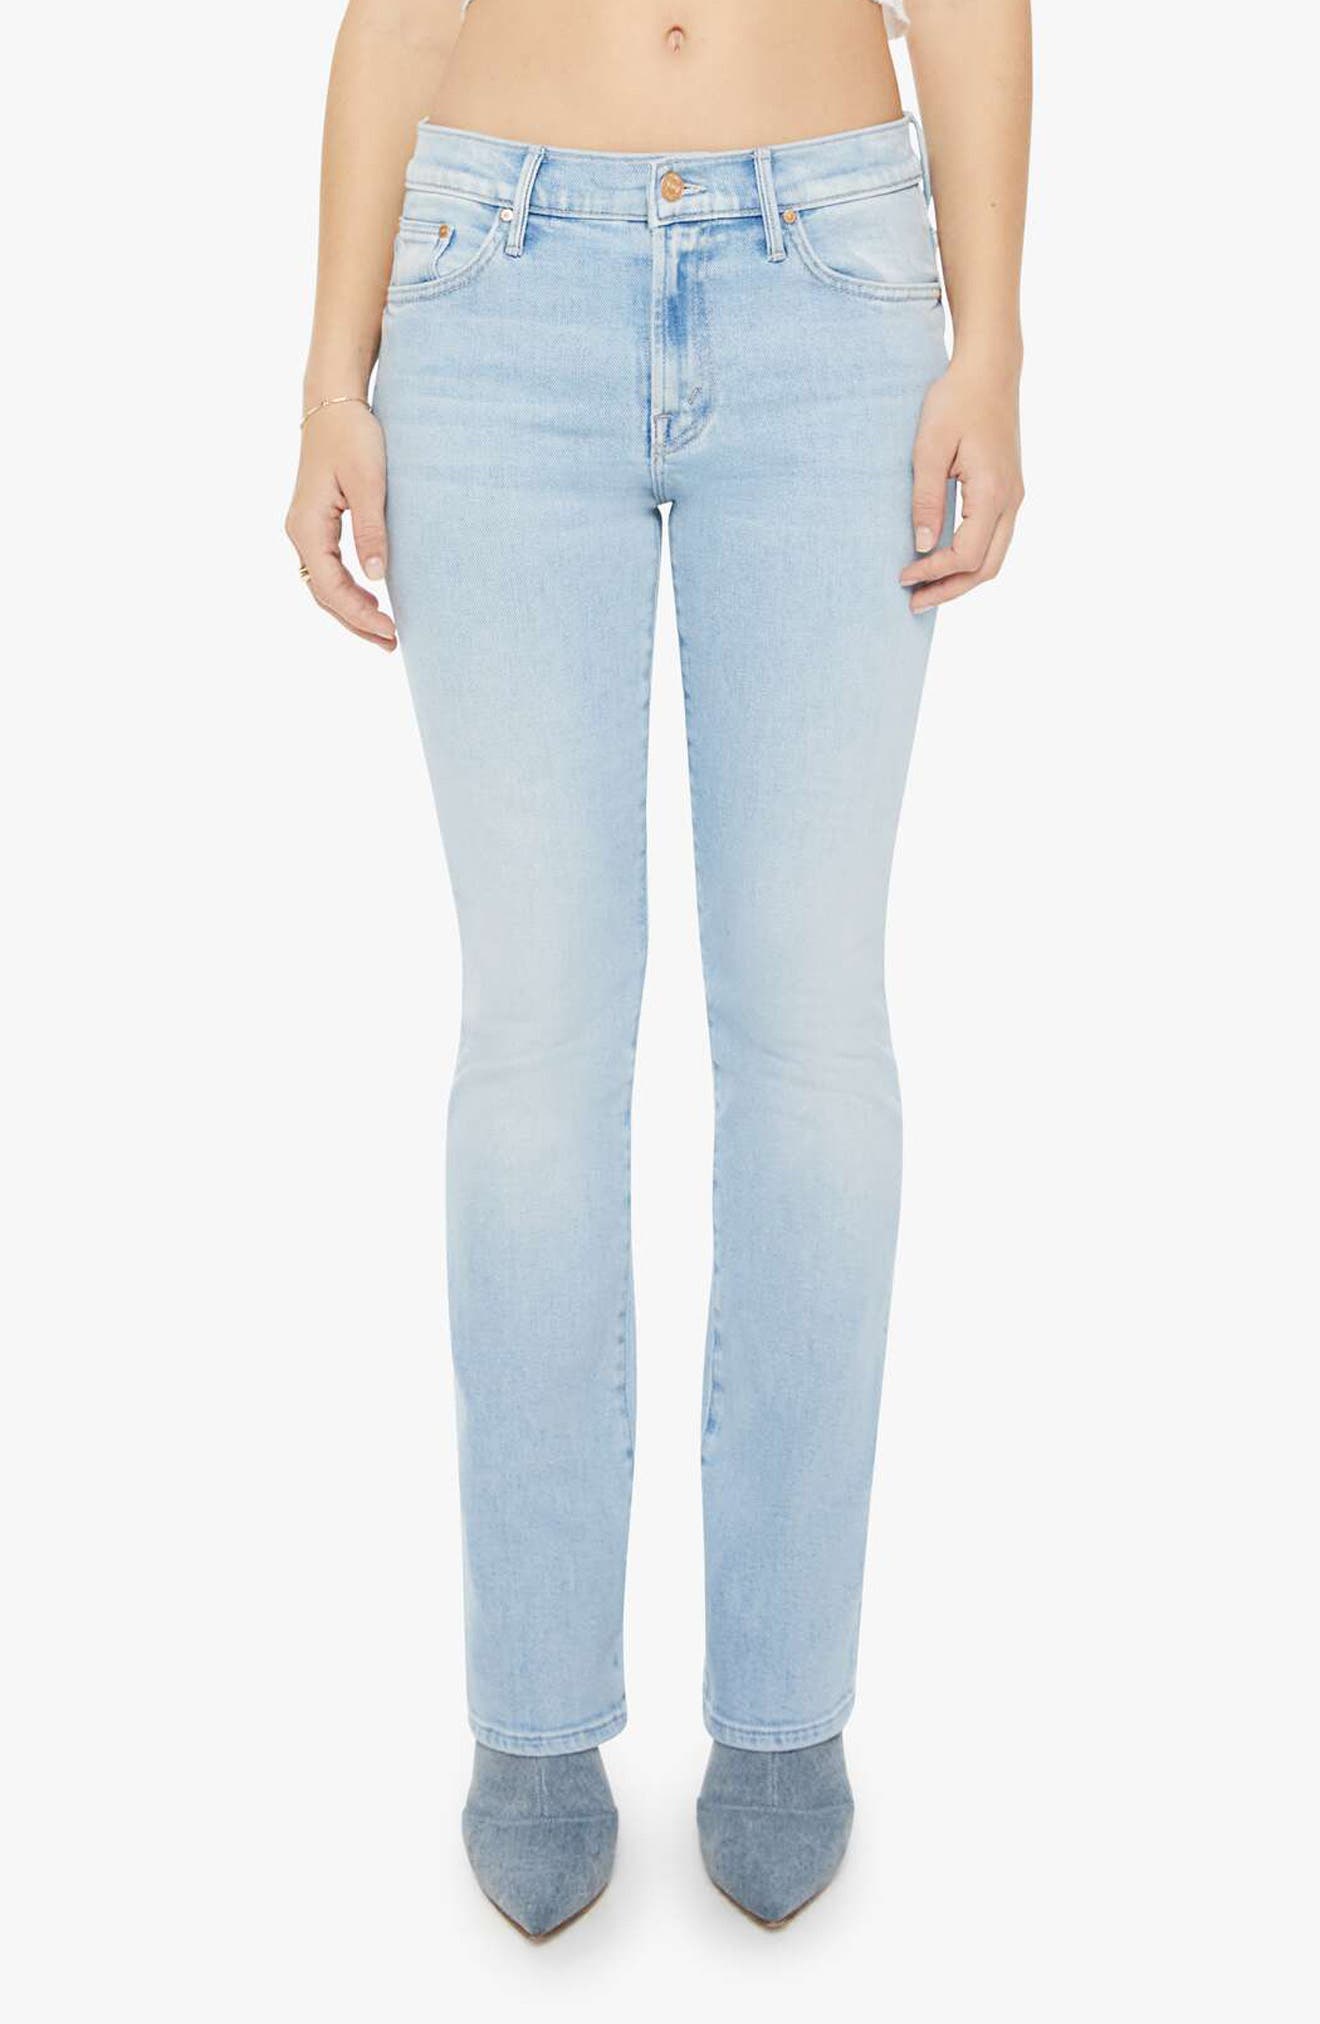 Marina Yee White Oversized Jeans